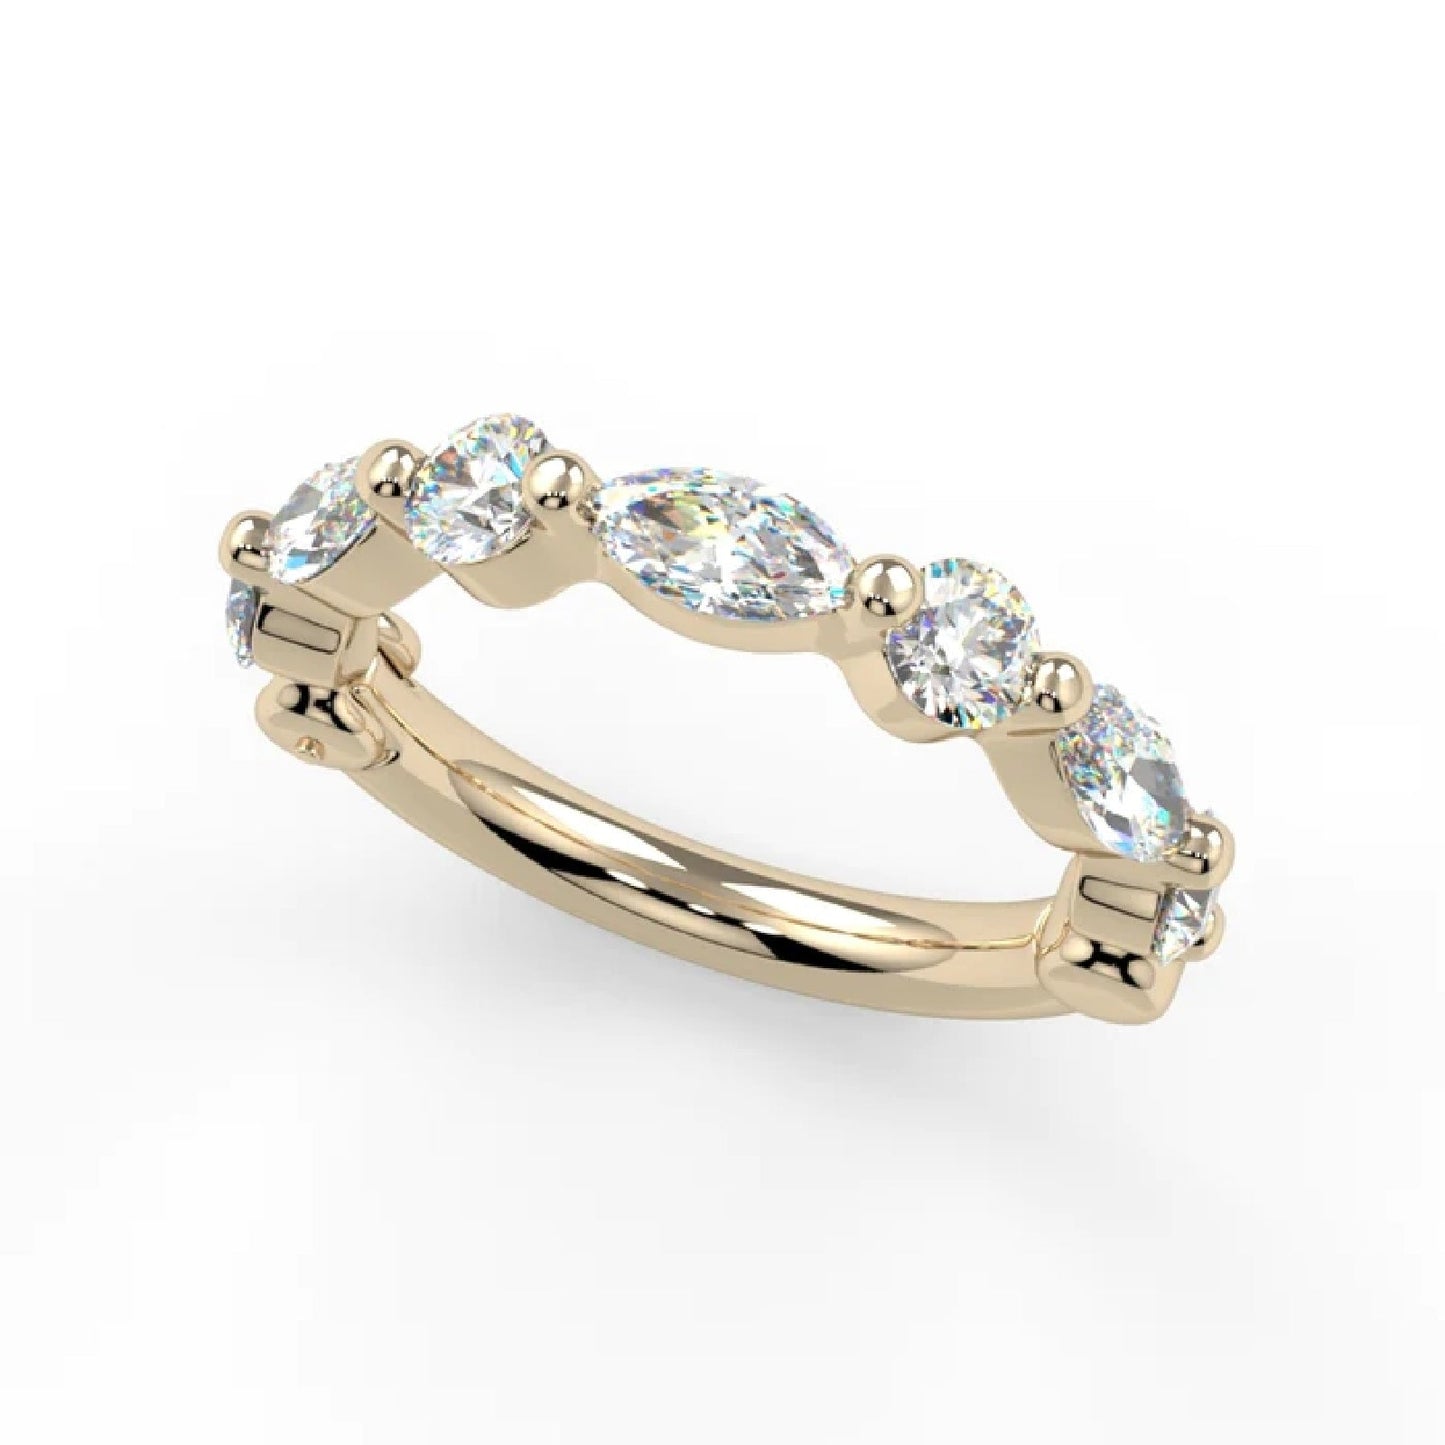 KIWI DIAMOND - LUANA CLICKER - NAVEL CONFIGURATION - 16G 7/16" - Genuine S1 Diamonds